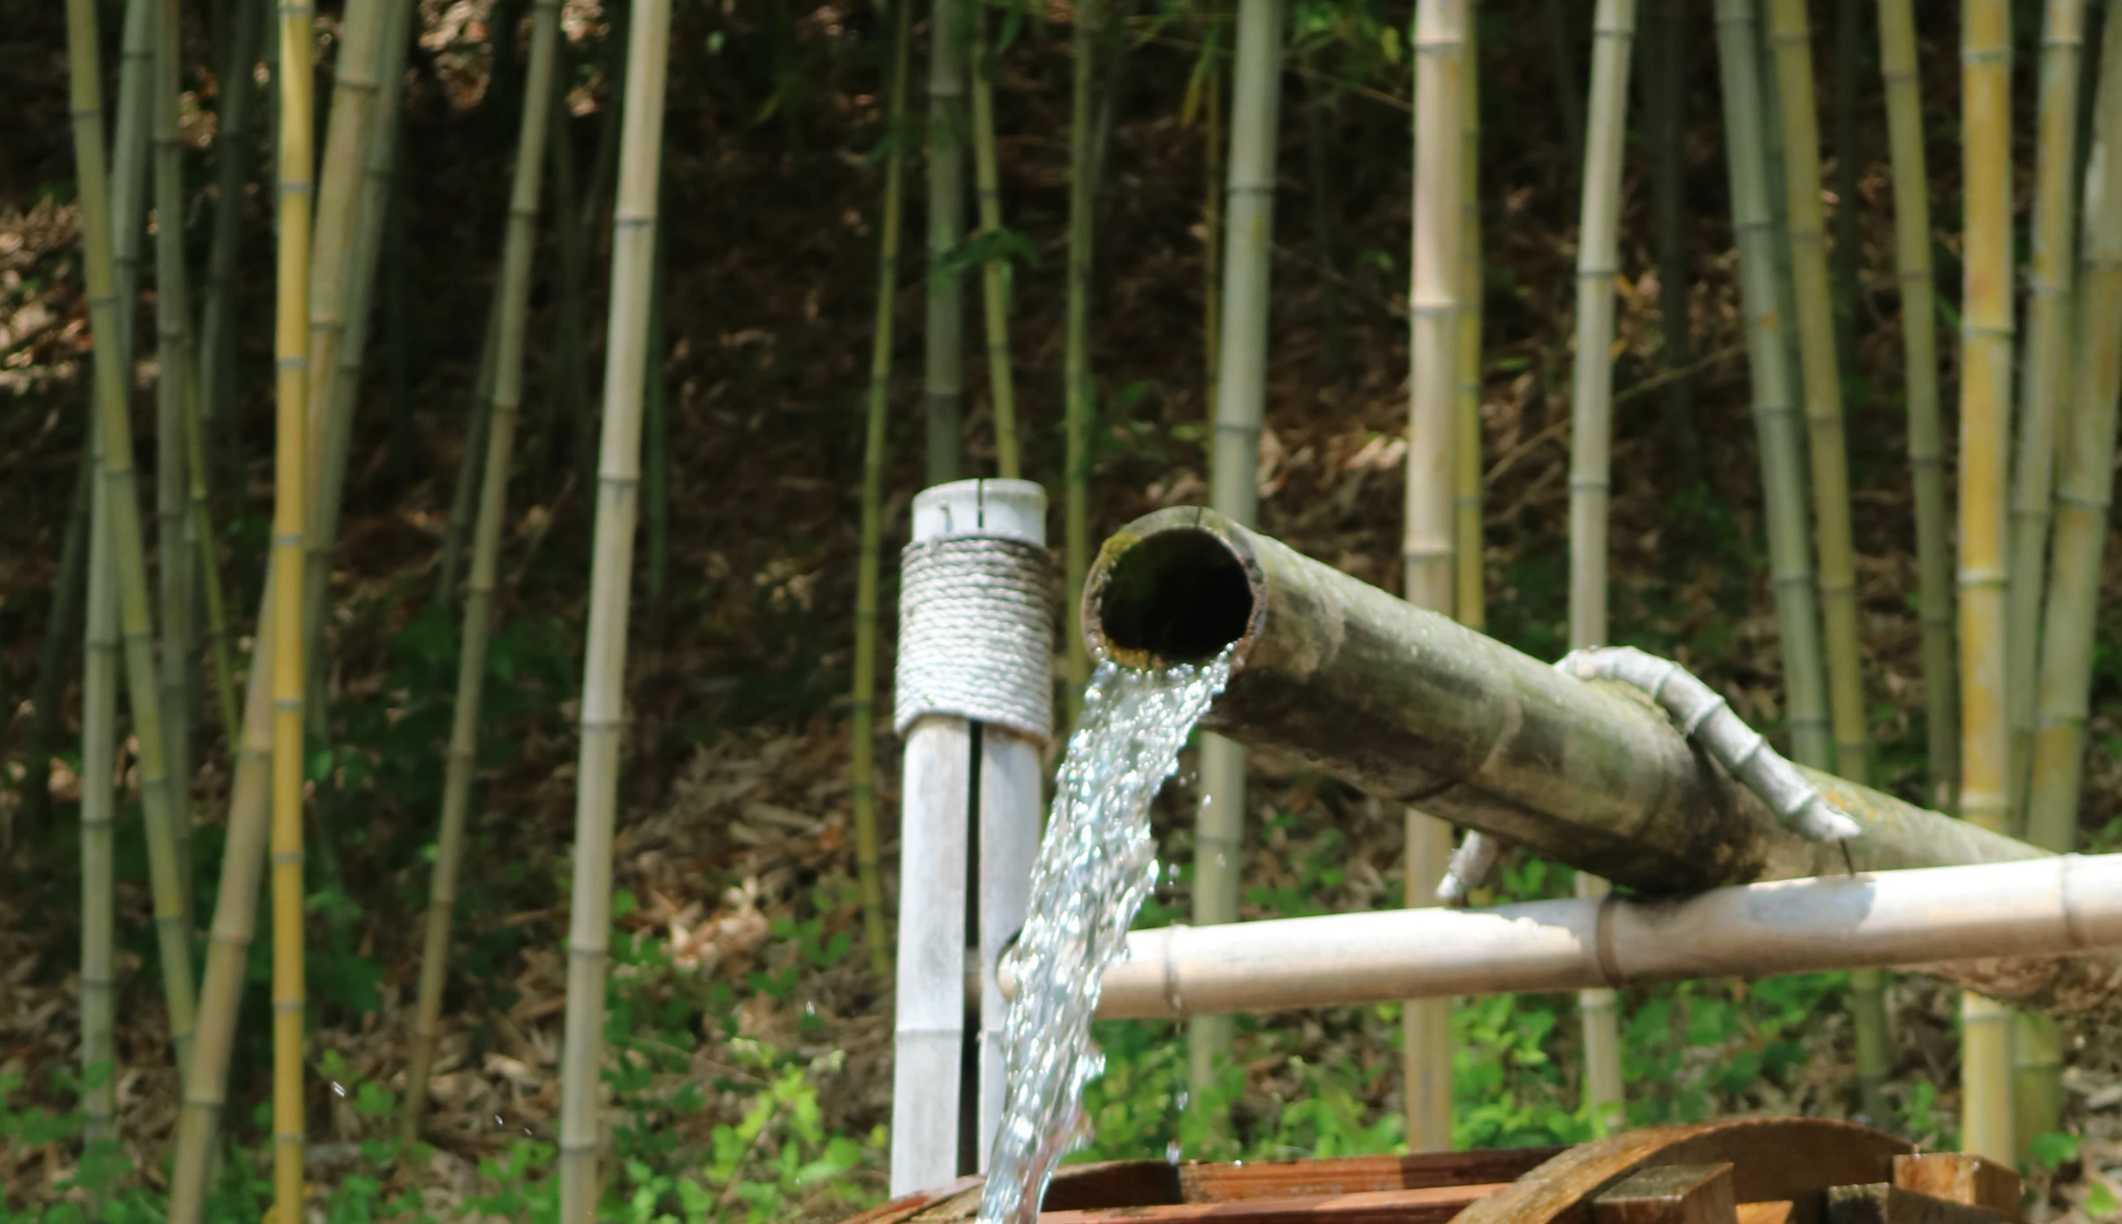 Watering bamboo